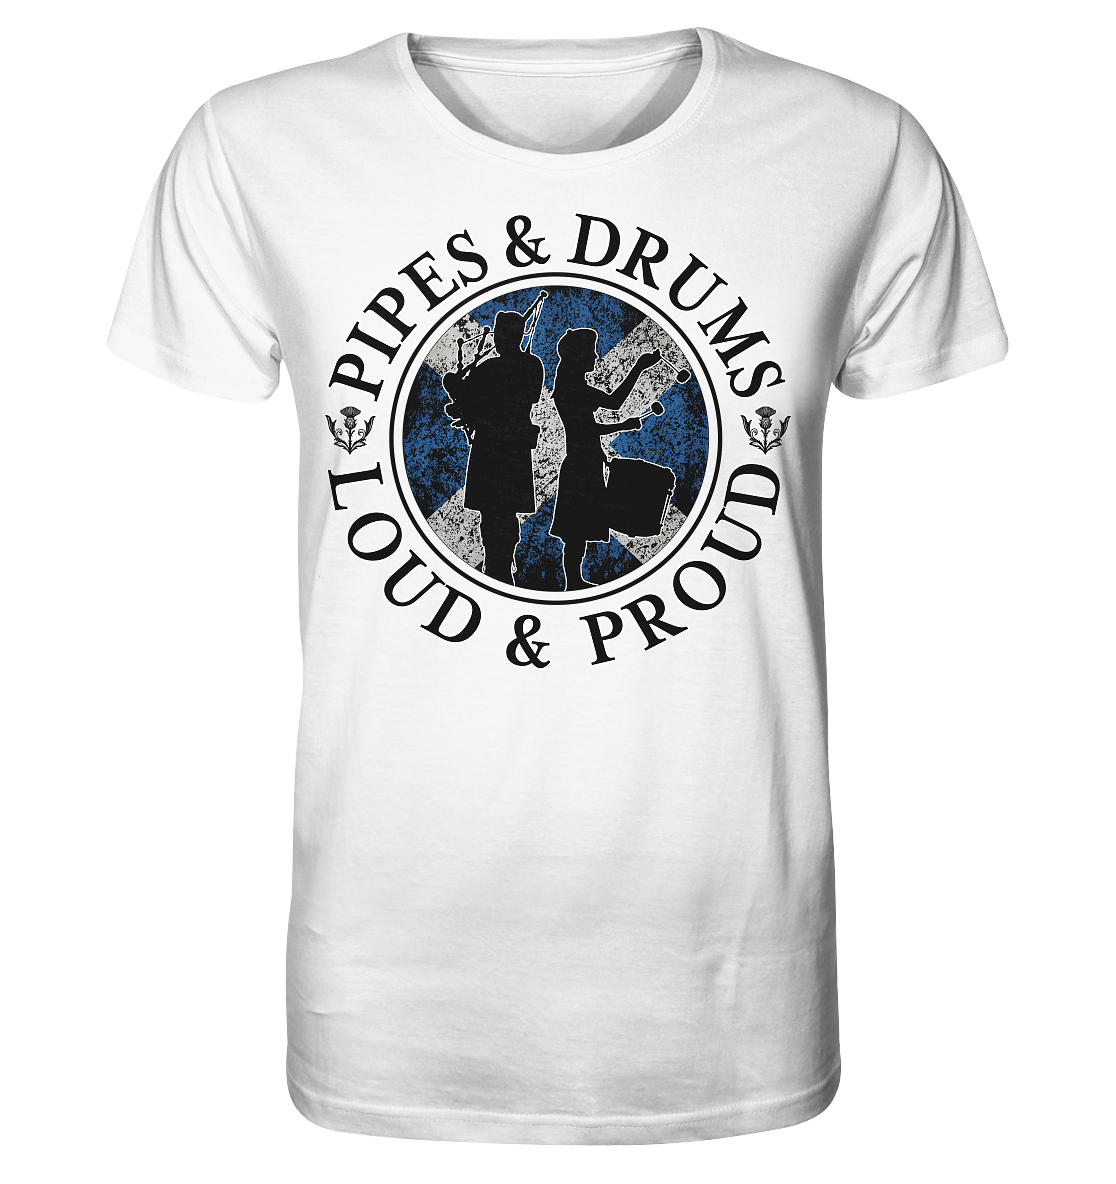 Pipes & Drums "Loud & Proud" - Organic Shirt